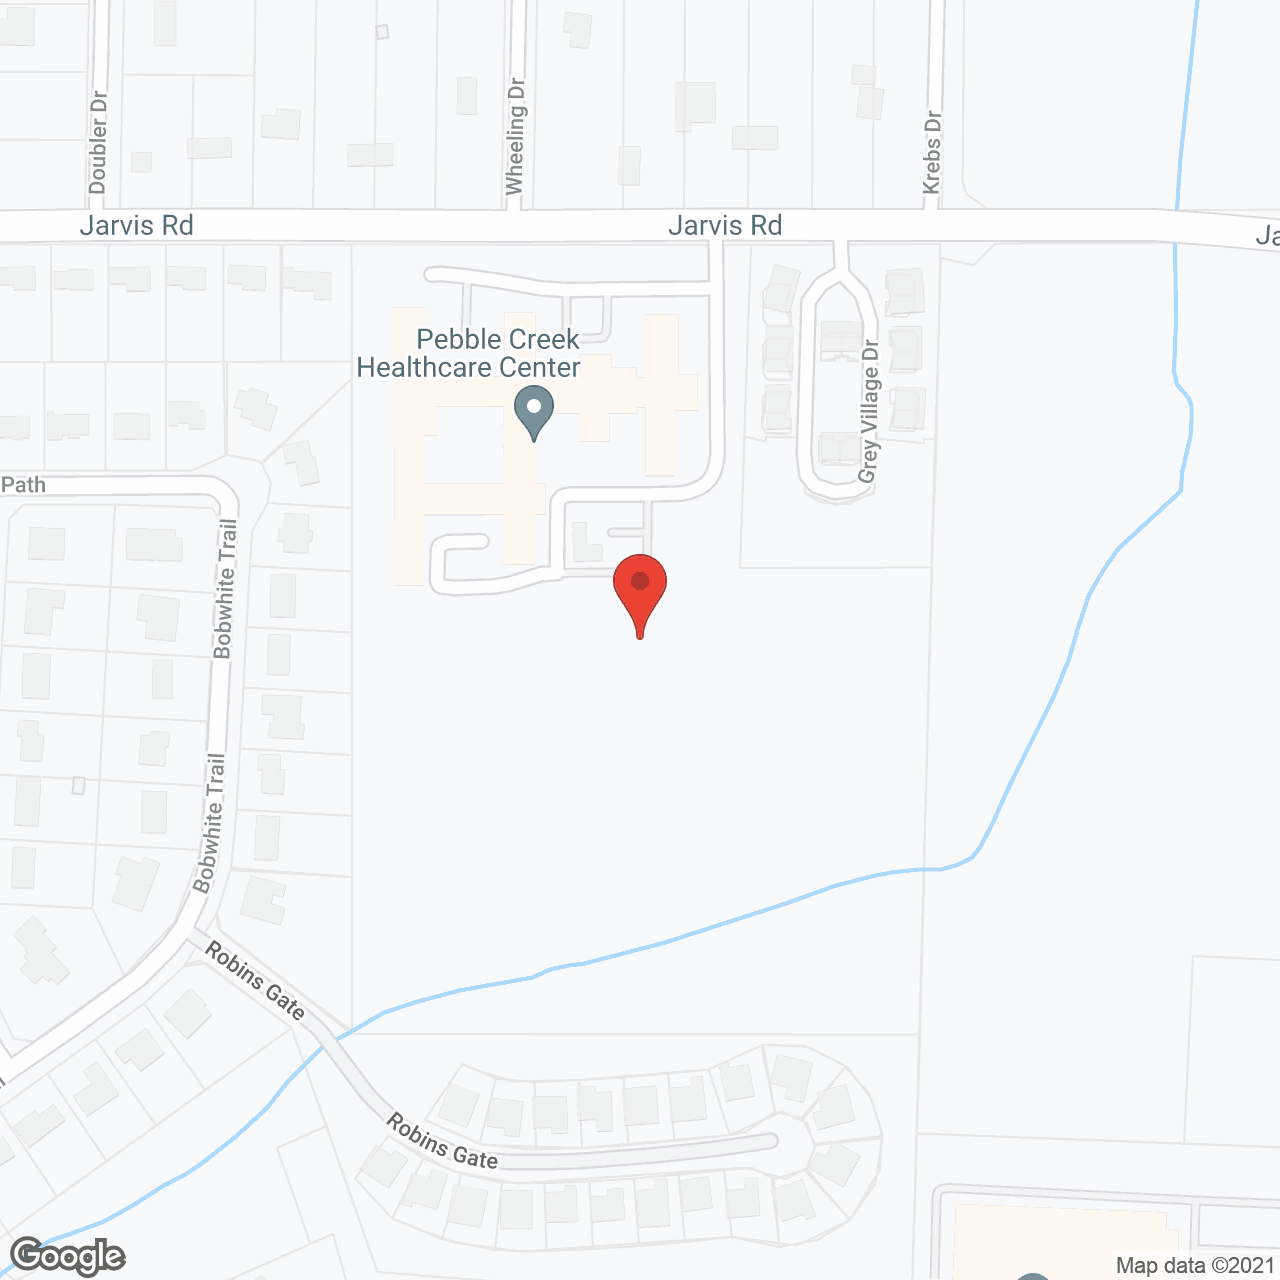 Pebble Creek Healthcare Center in google map